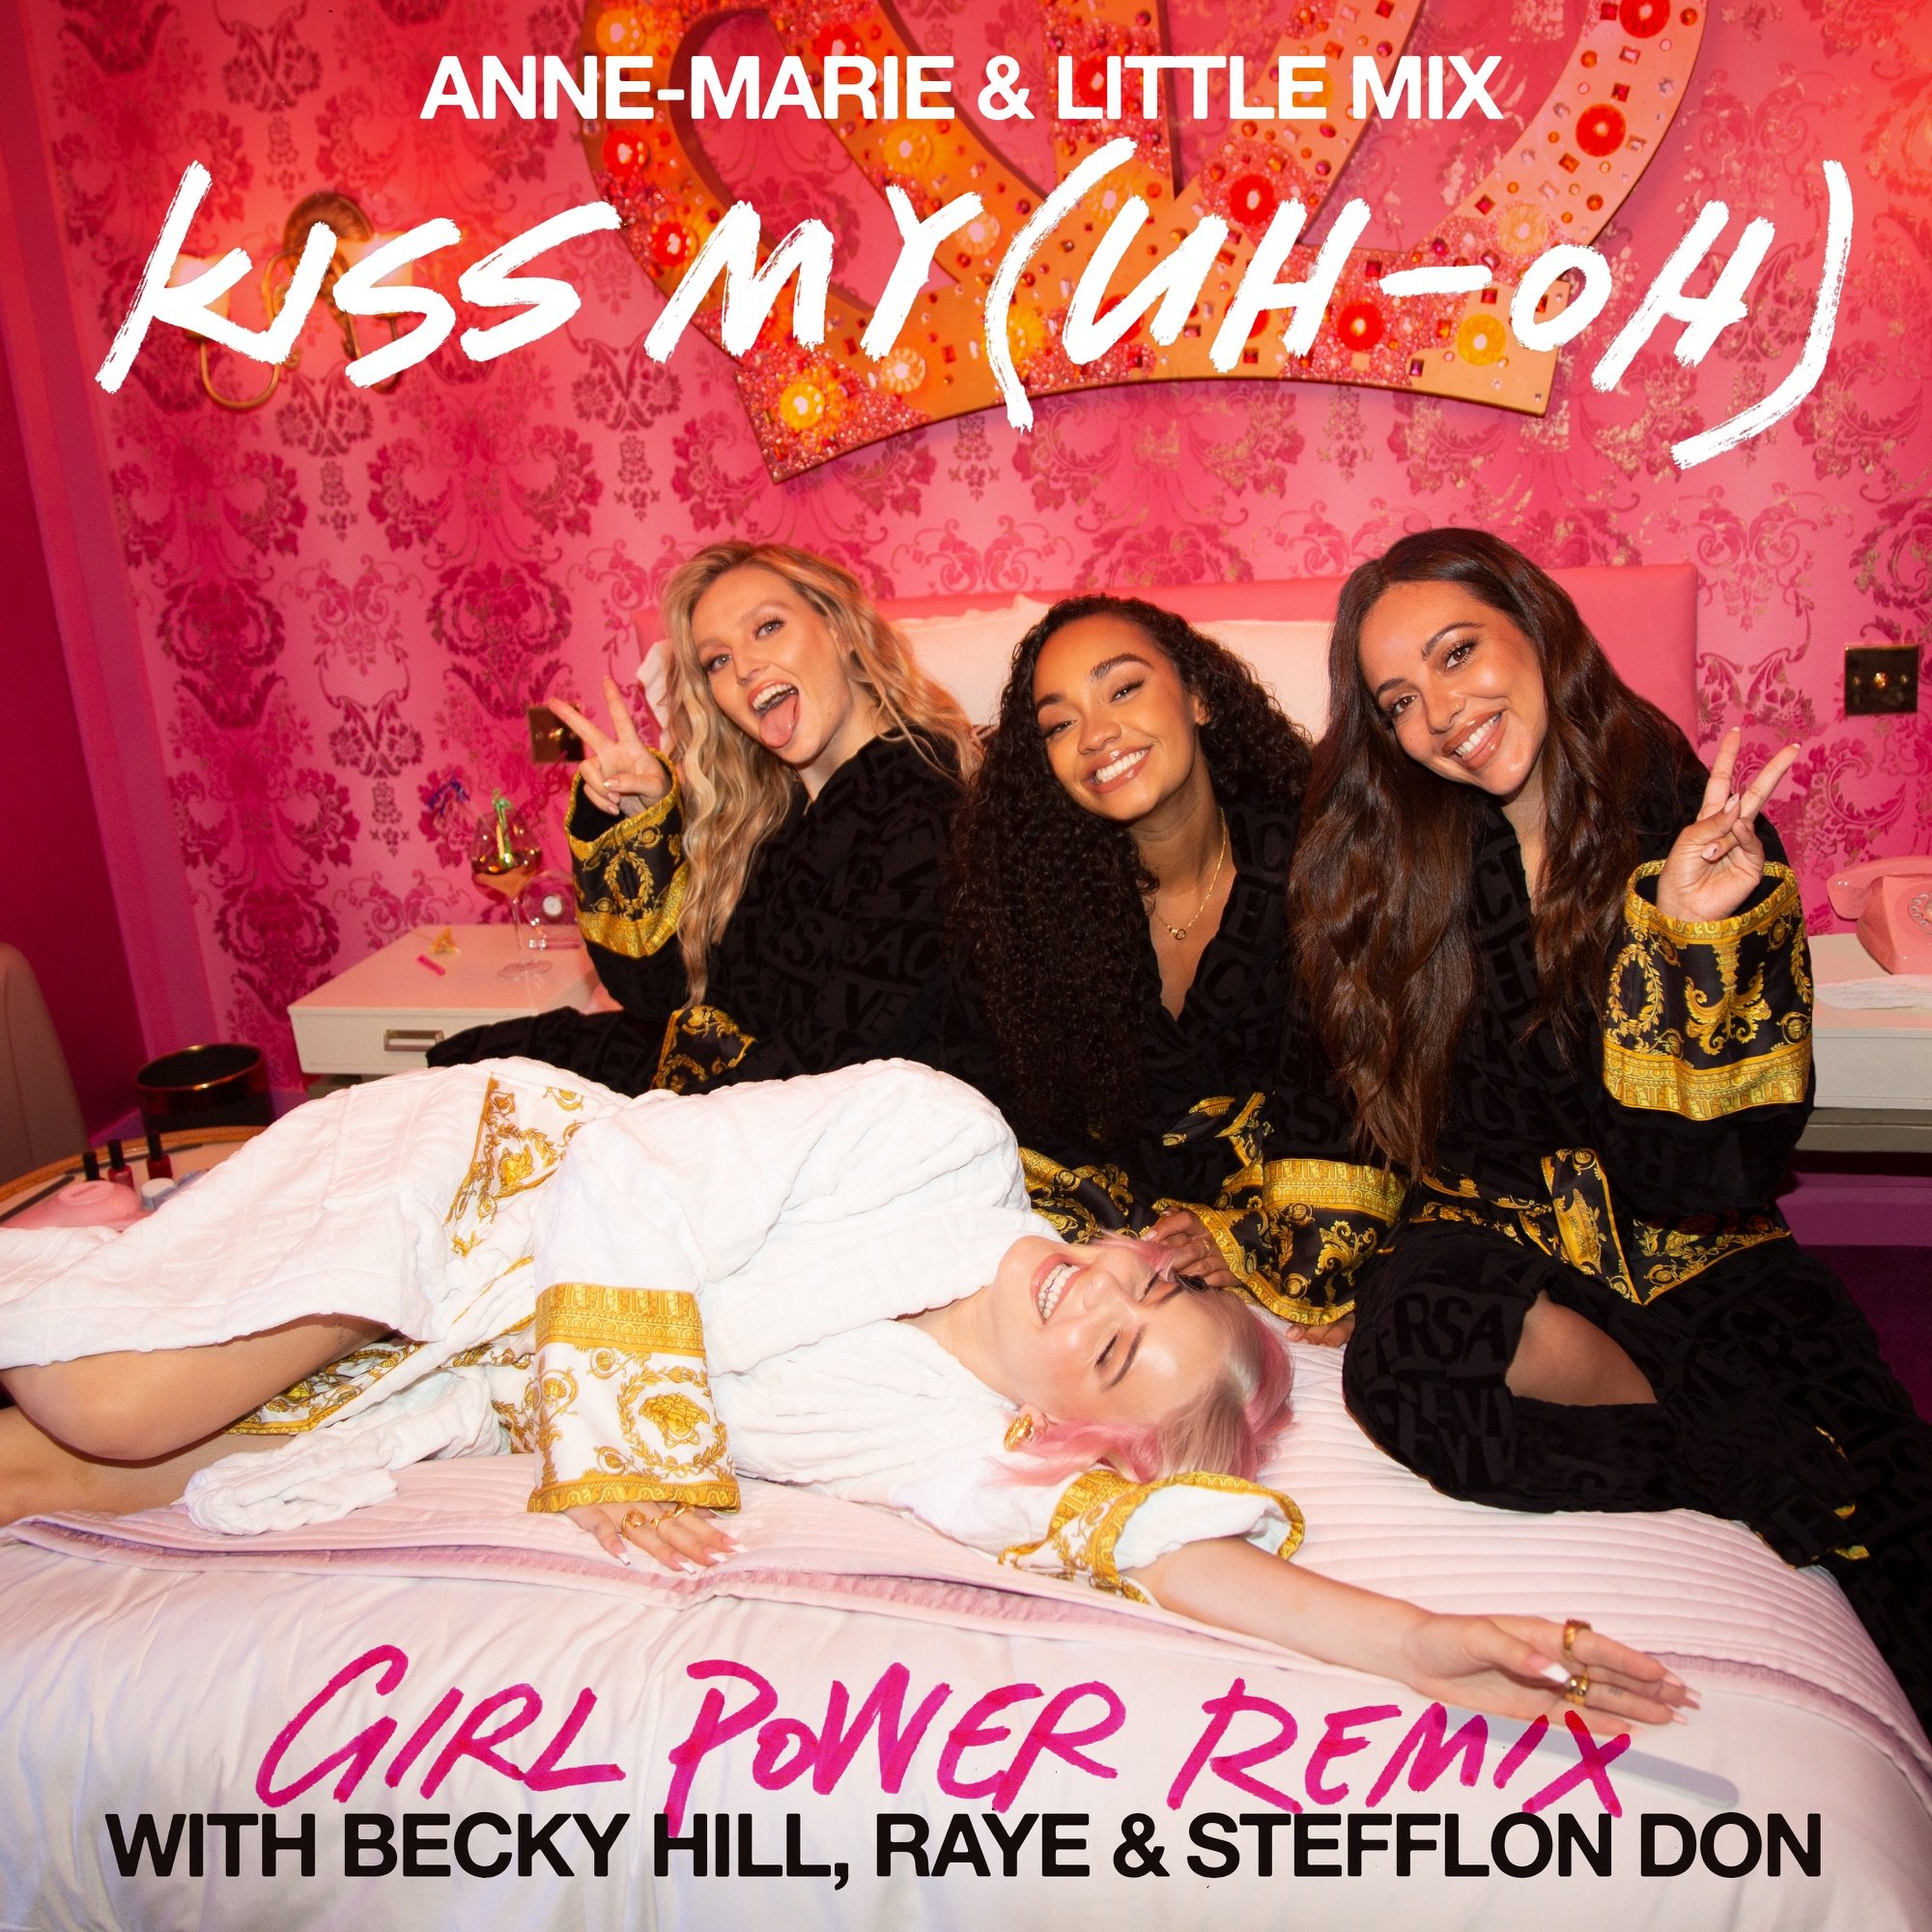 Kissing песня слушать. Anne-Marie & little Mix - Kiss my (uh Oh). Kiss my little Mix Anne Marie. Little Mix Anne Marie. Kiss my Энн-Мари.